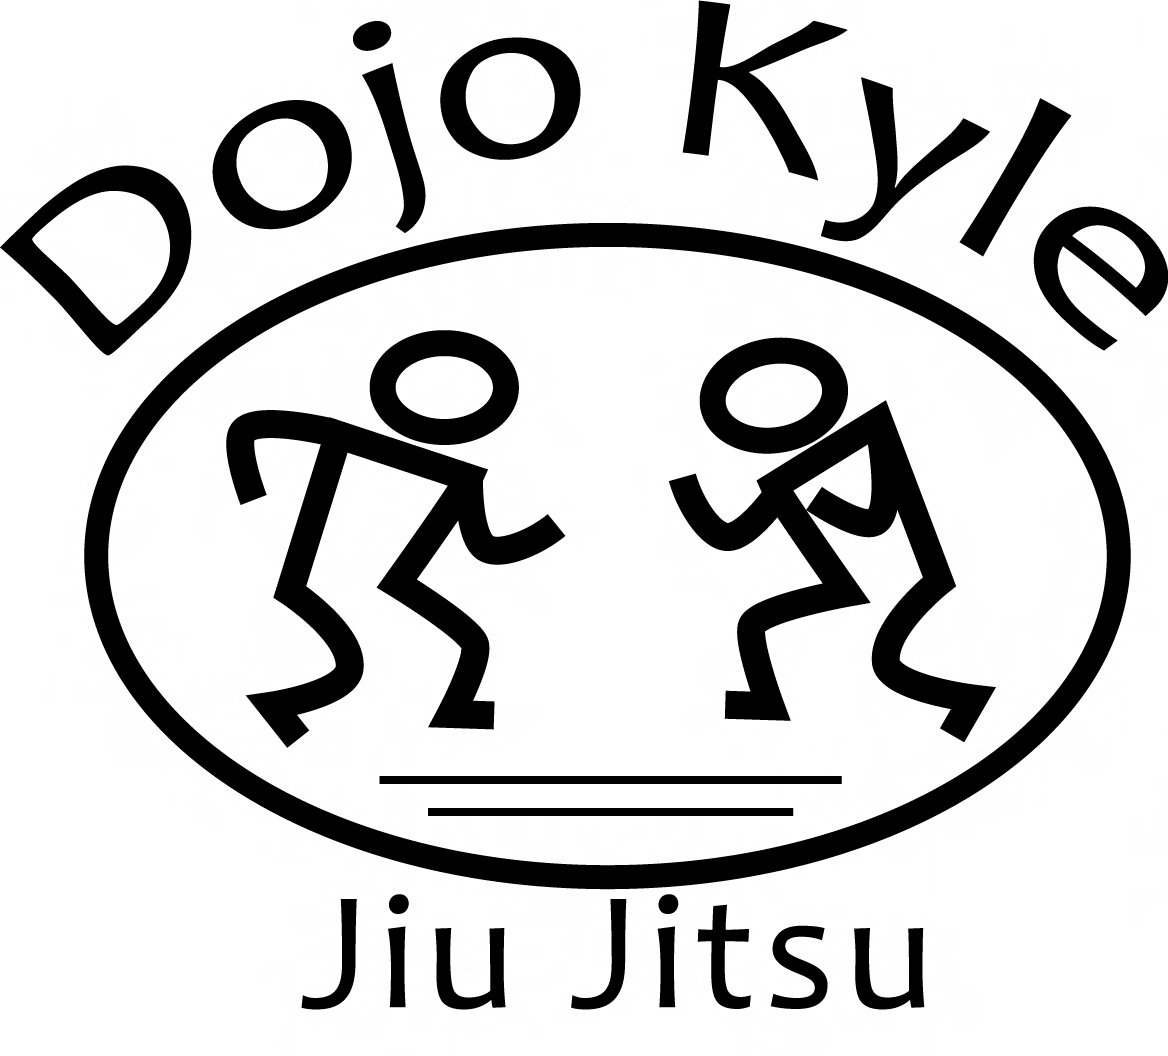 Local Deal! — Two Weeks of Youth Martial Arts + Private Intro Class for $19 @ Dojo Kyle Brazilian Jiu Jitsu